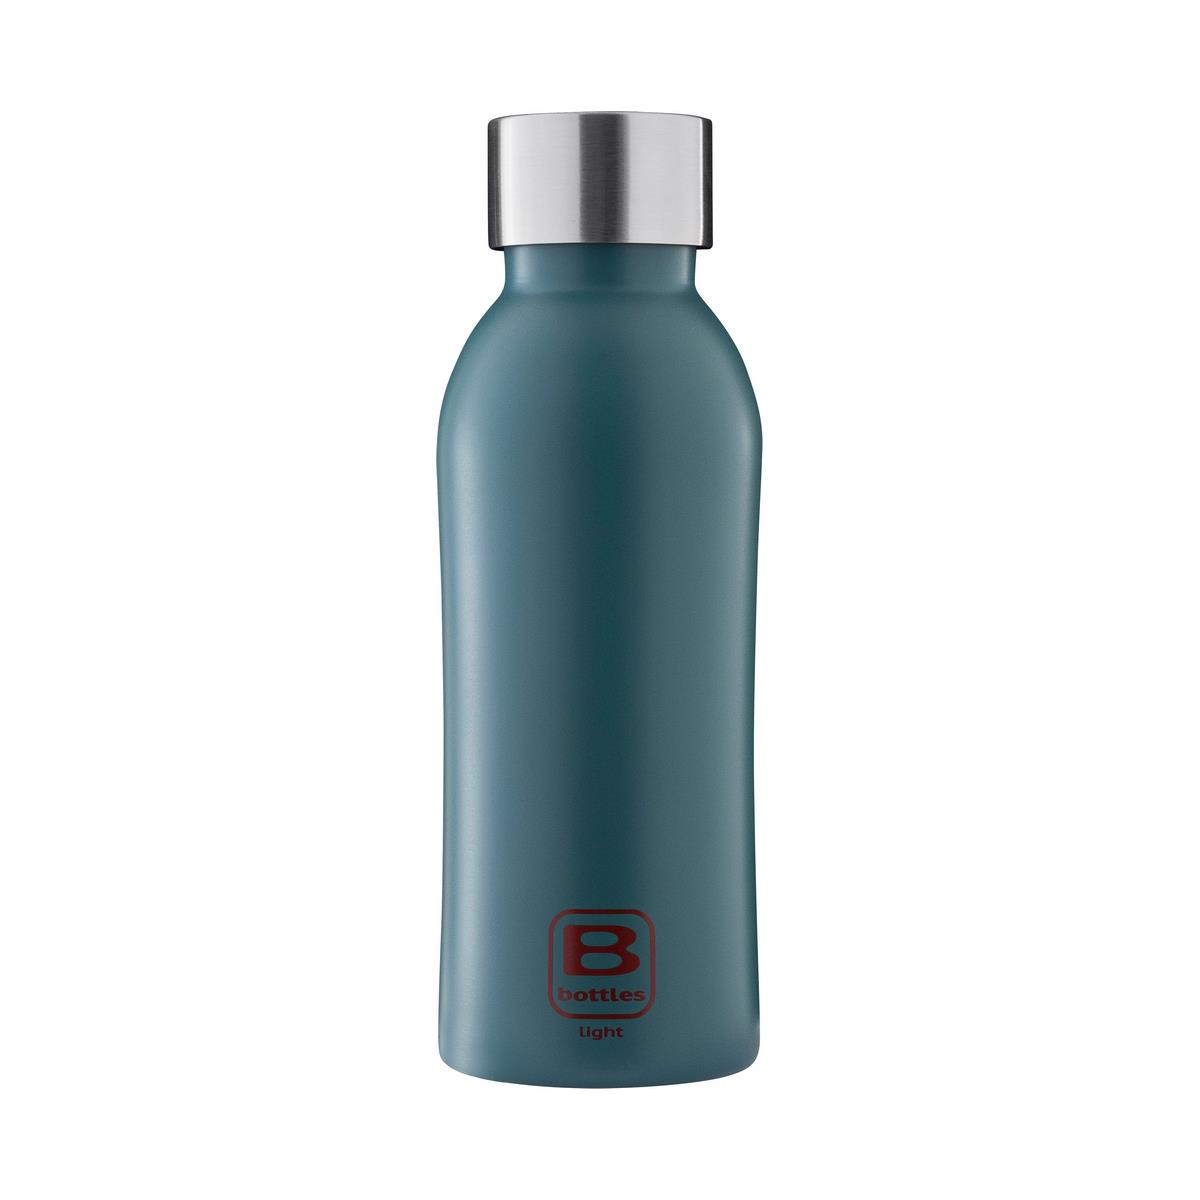 B Bottles Light - Teal Blue - 530 ml - Bottiglia in acciaio inox 18/10 ultra leggera e compatta